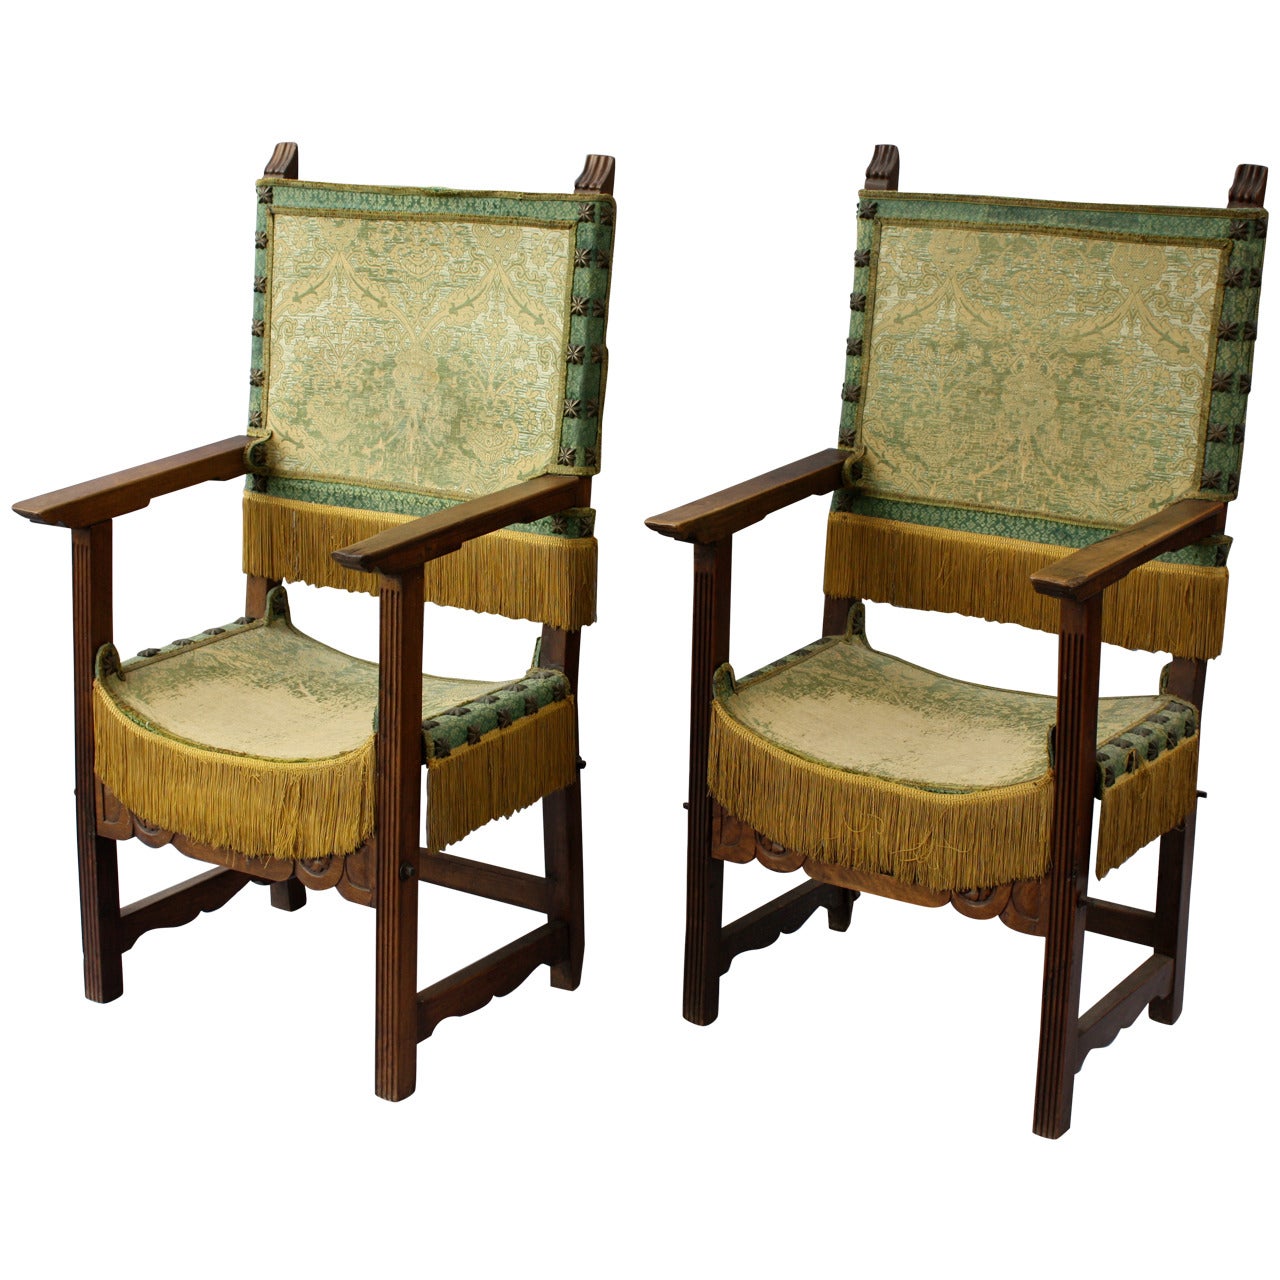 European 19th Century Pair of Chairs